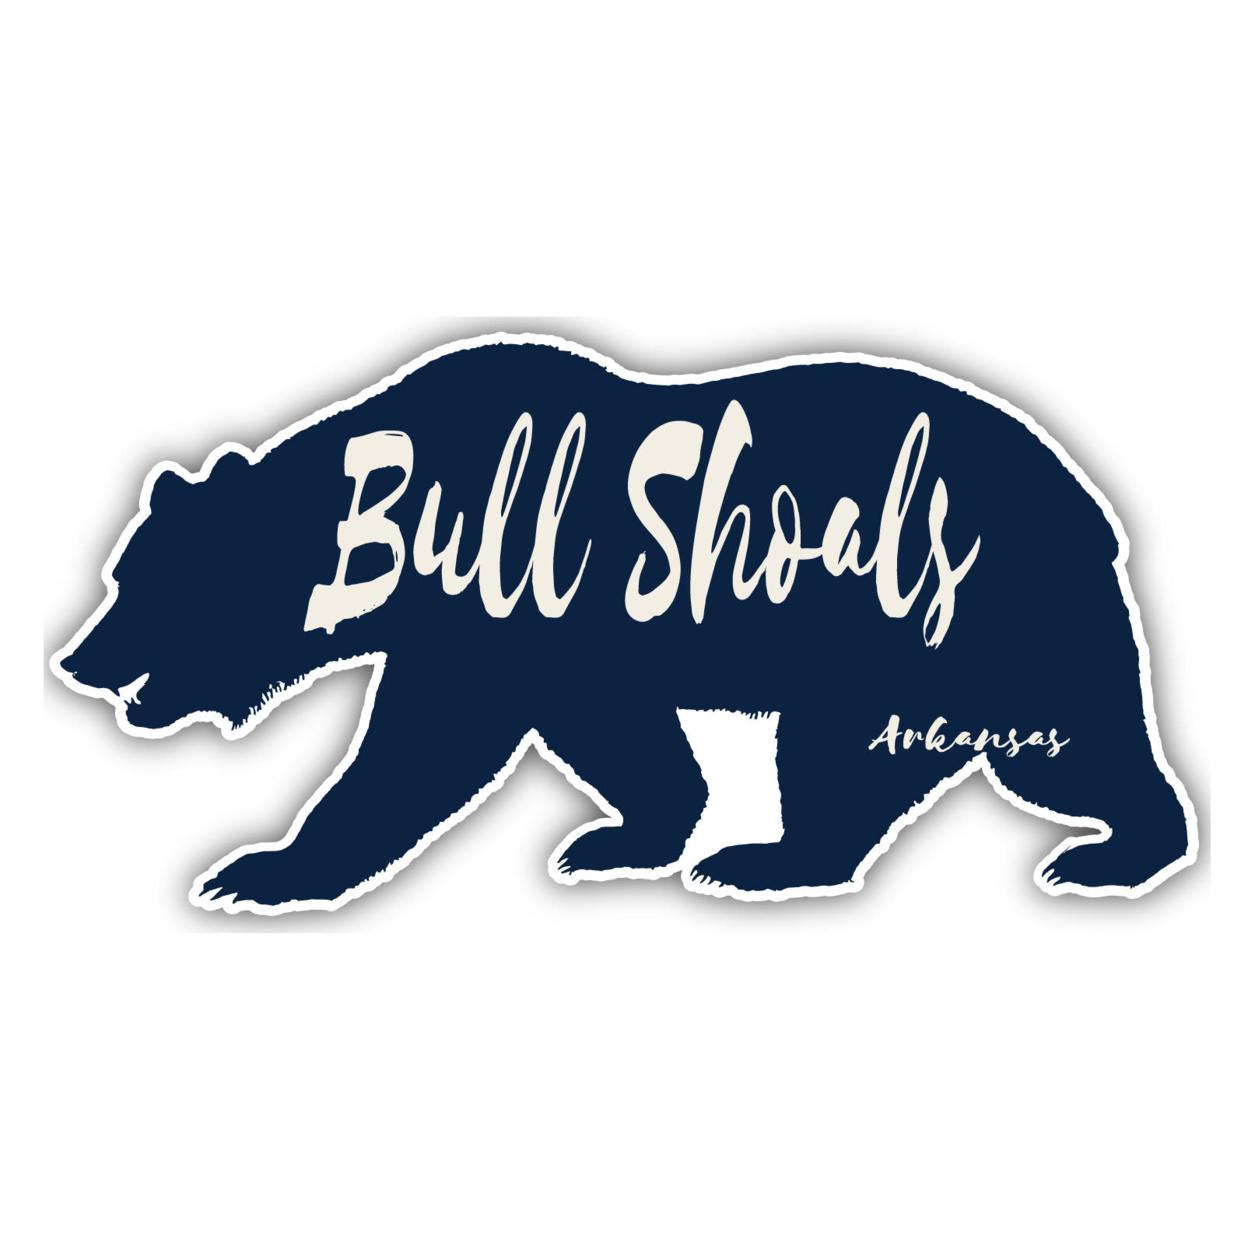 Bull Shoals Arkansas Souvenir Decorative Stickers (Choose Theme And Size) - Single Unit, 4-Inch, Adventures Awaits